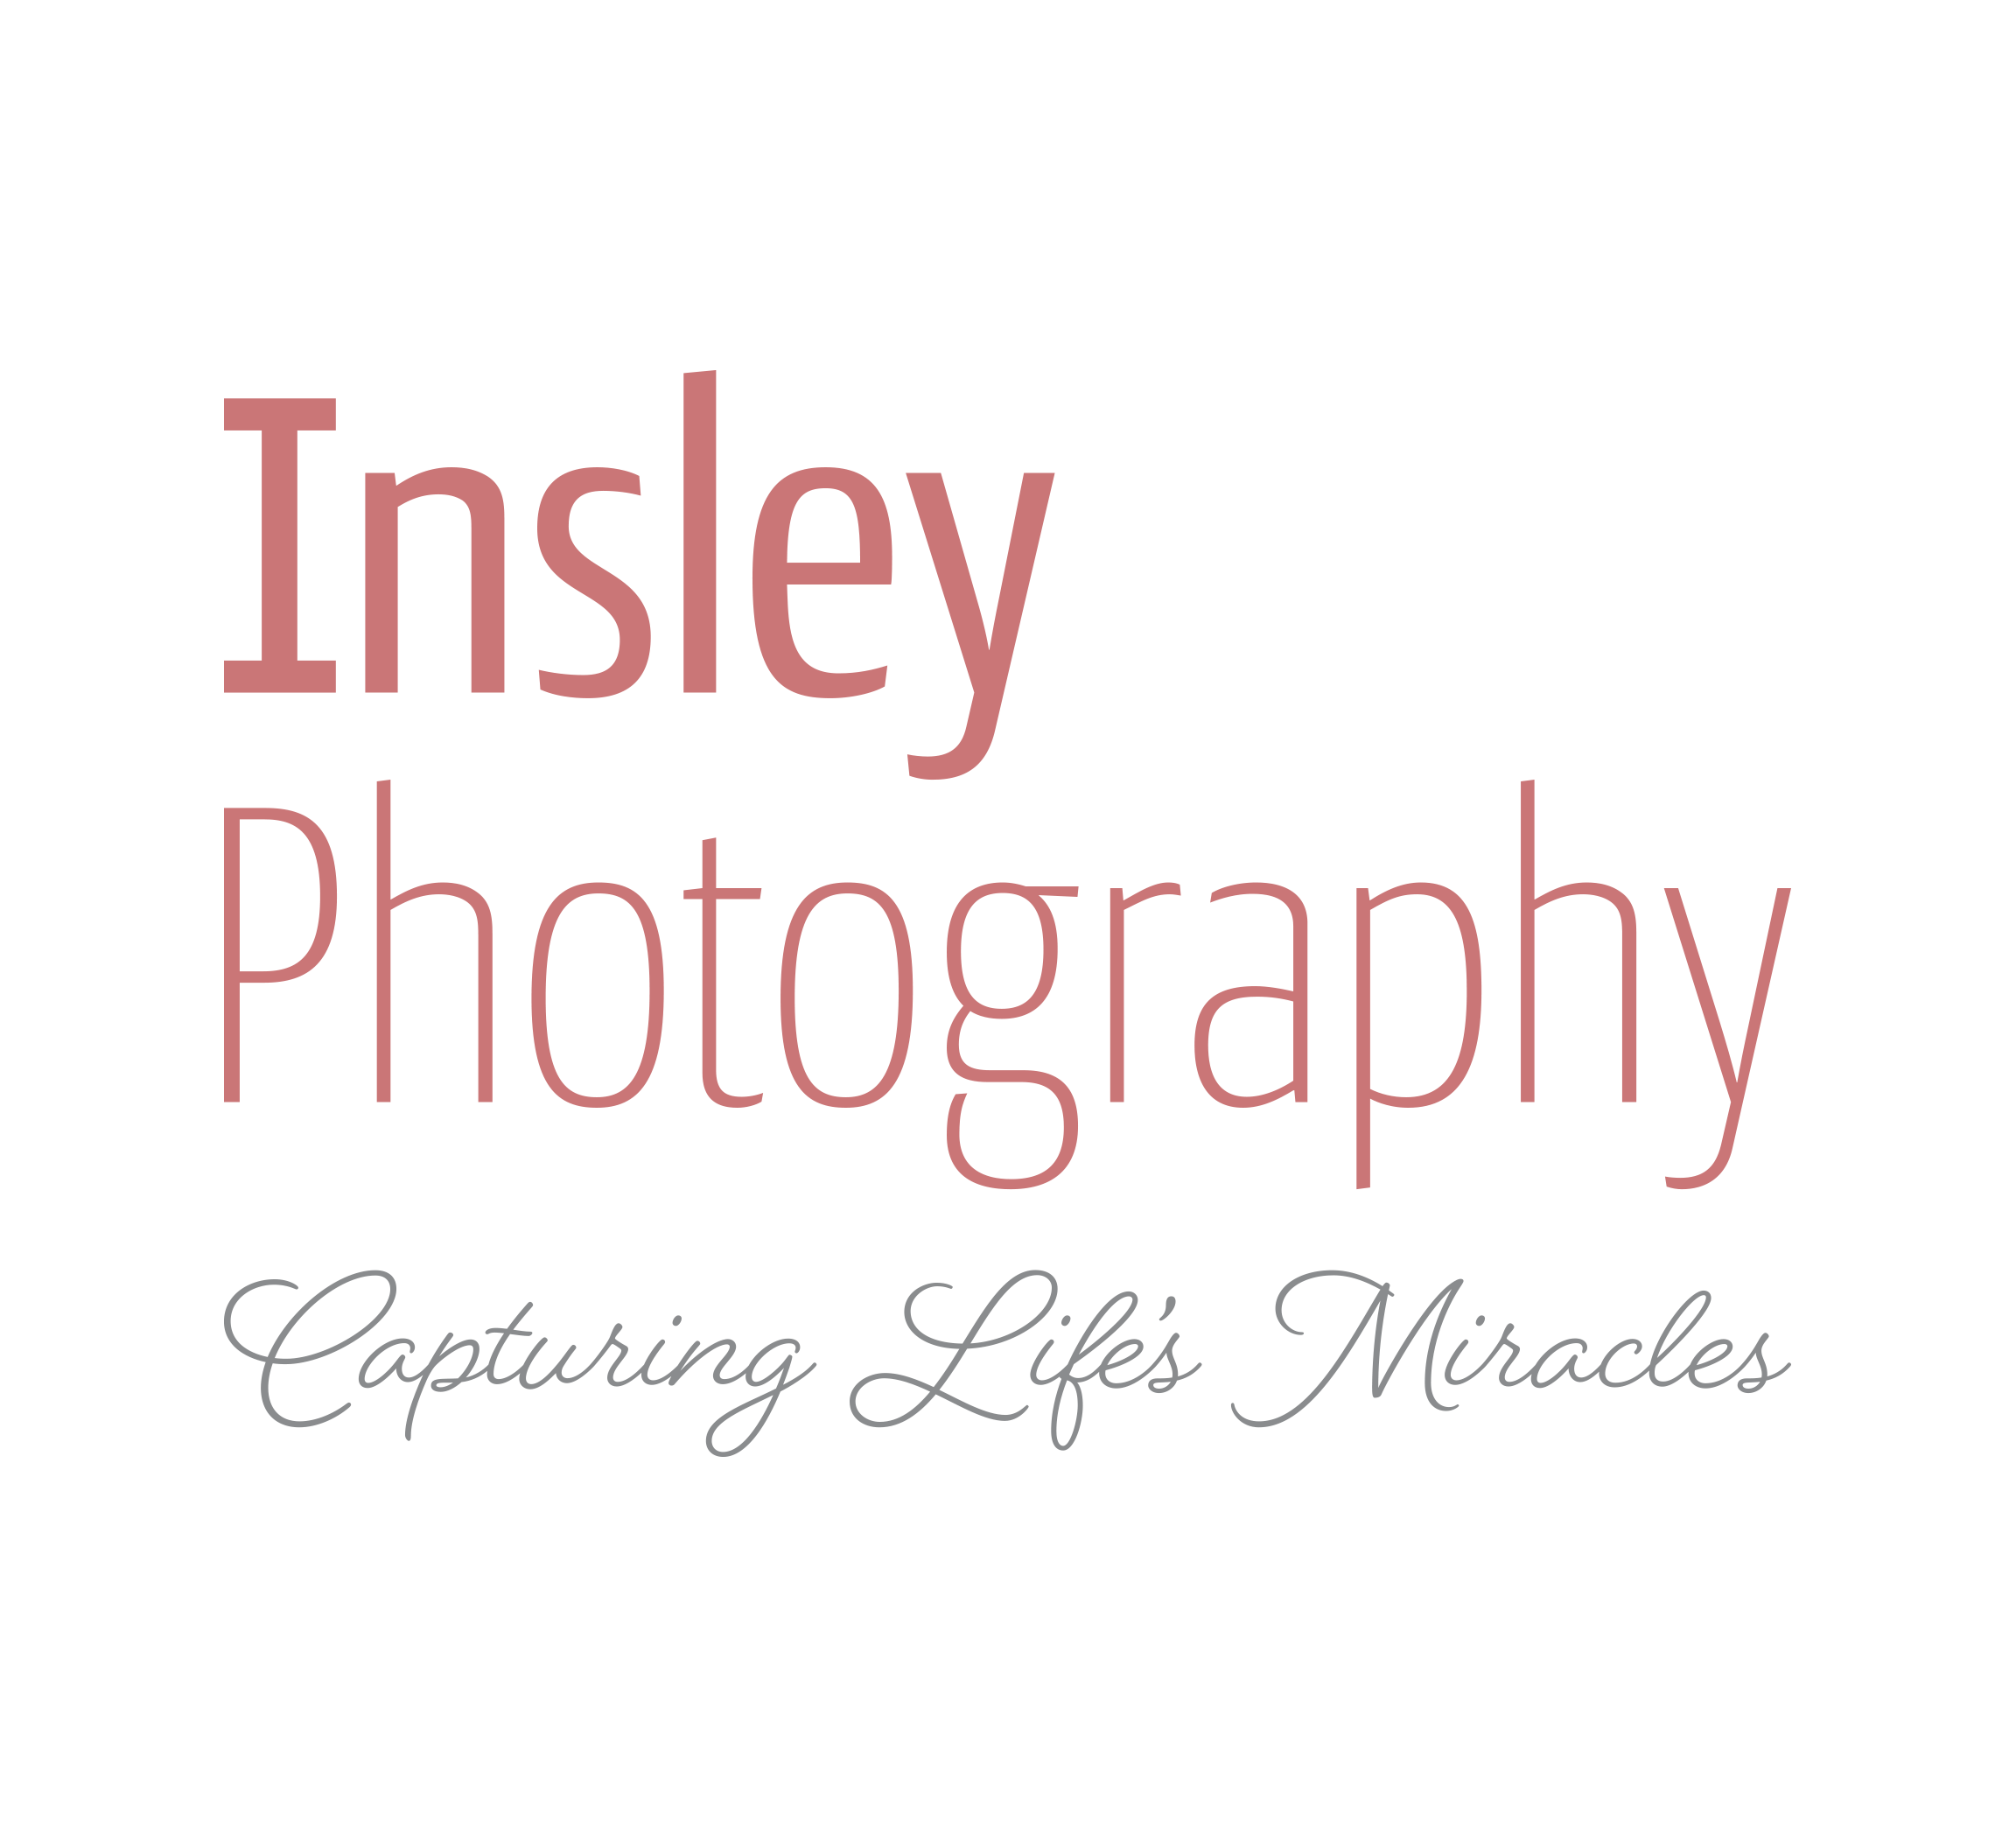 Insley Photography Logo